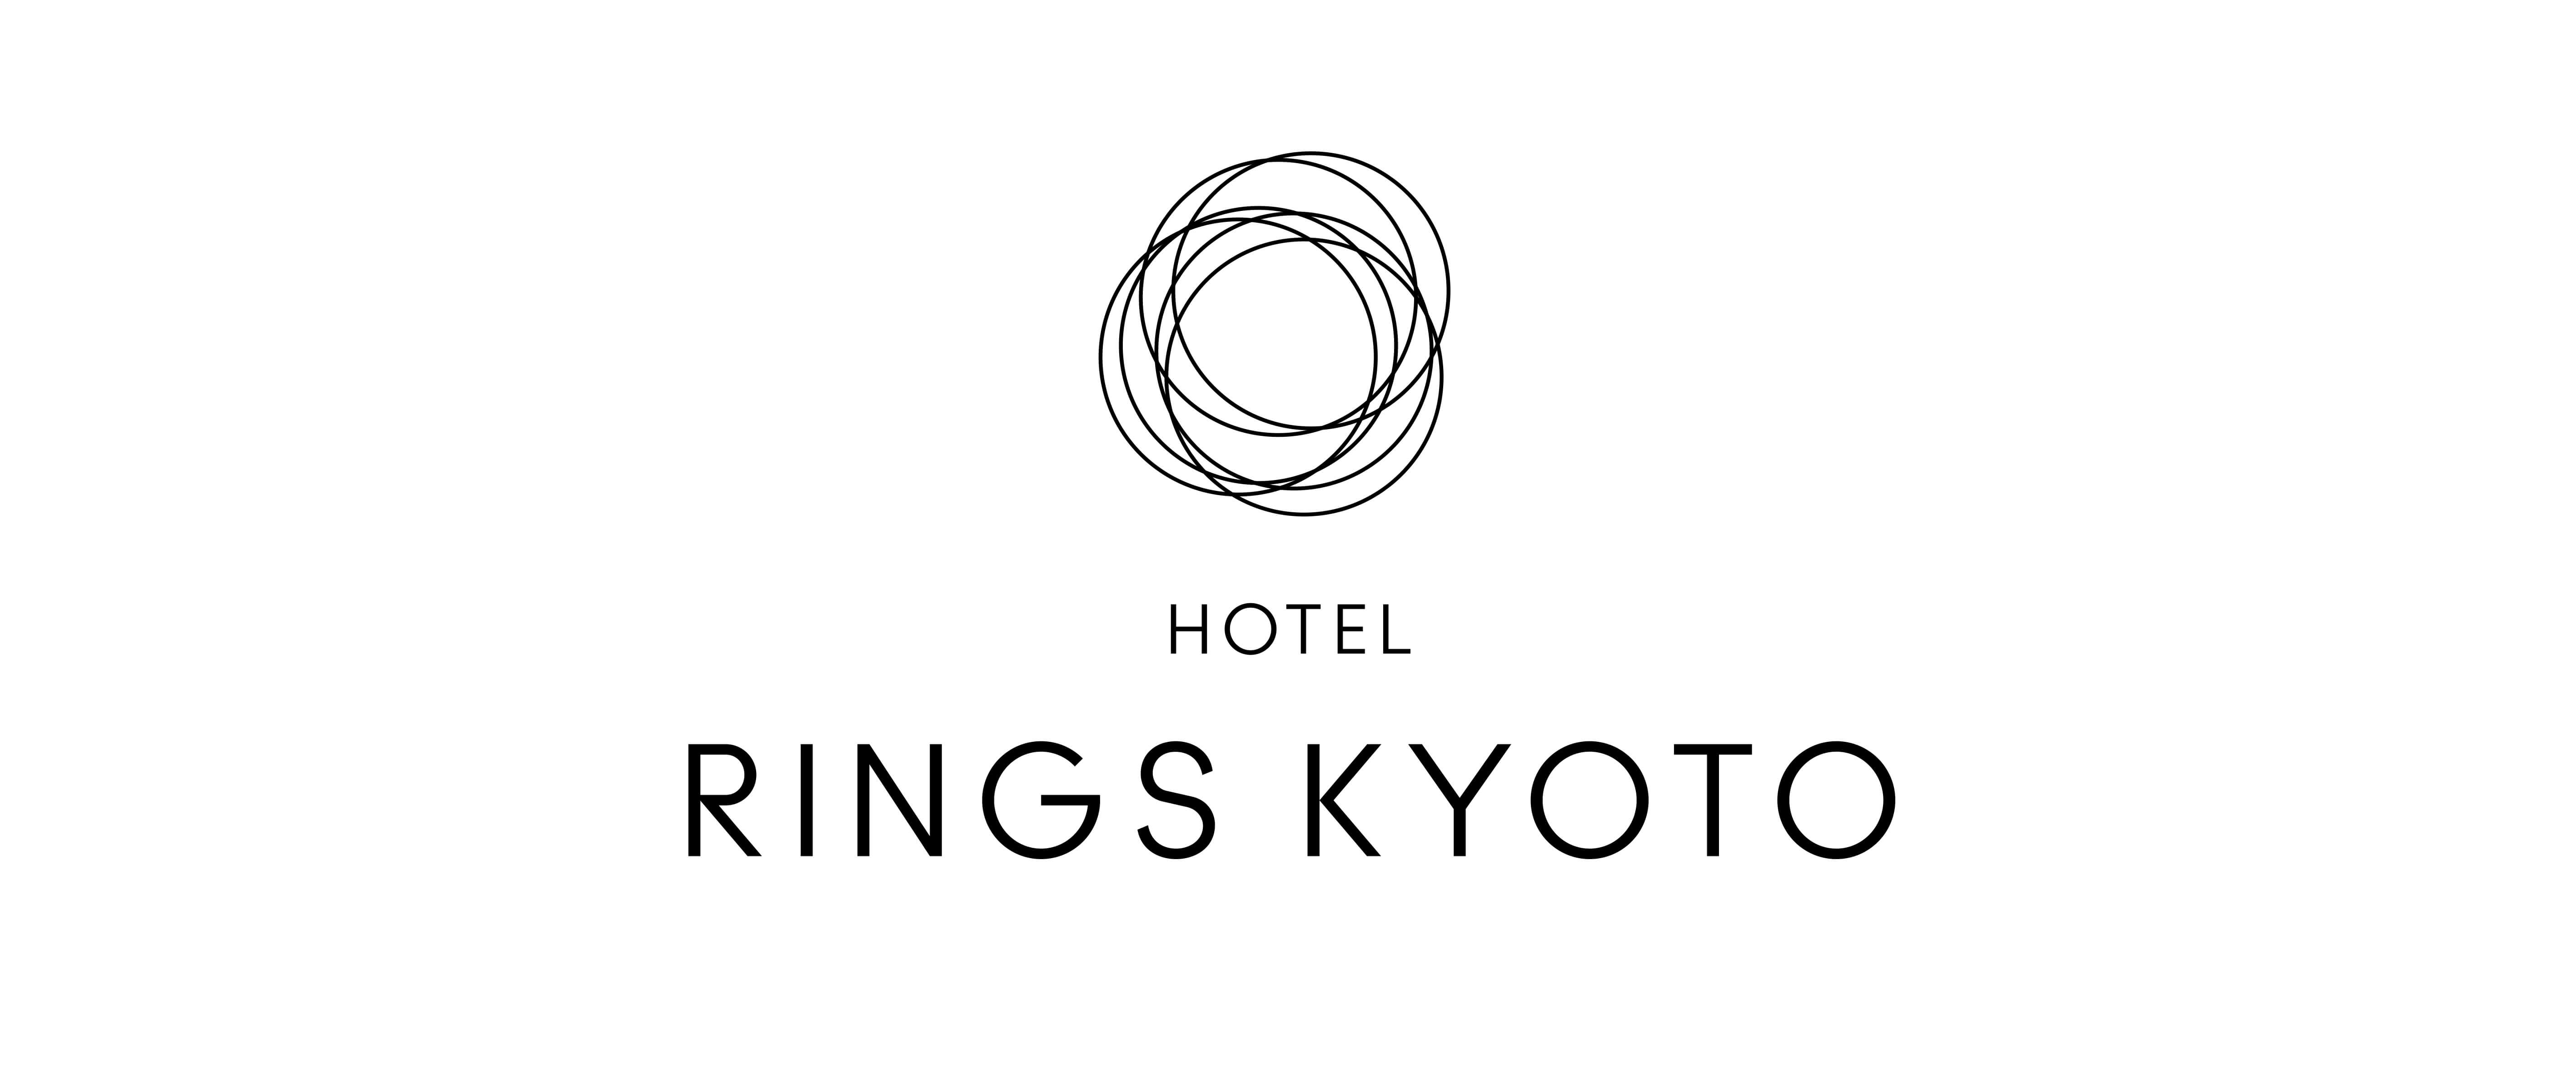 HOTEL RINGS KYOTO LOGO